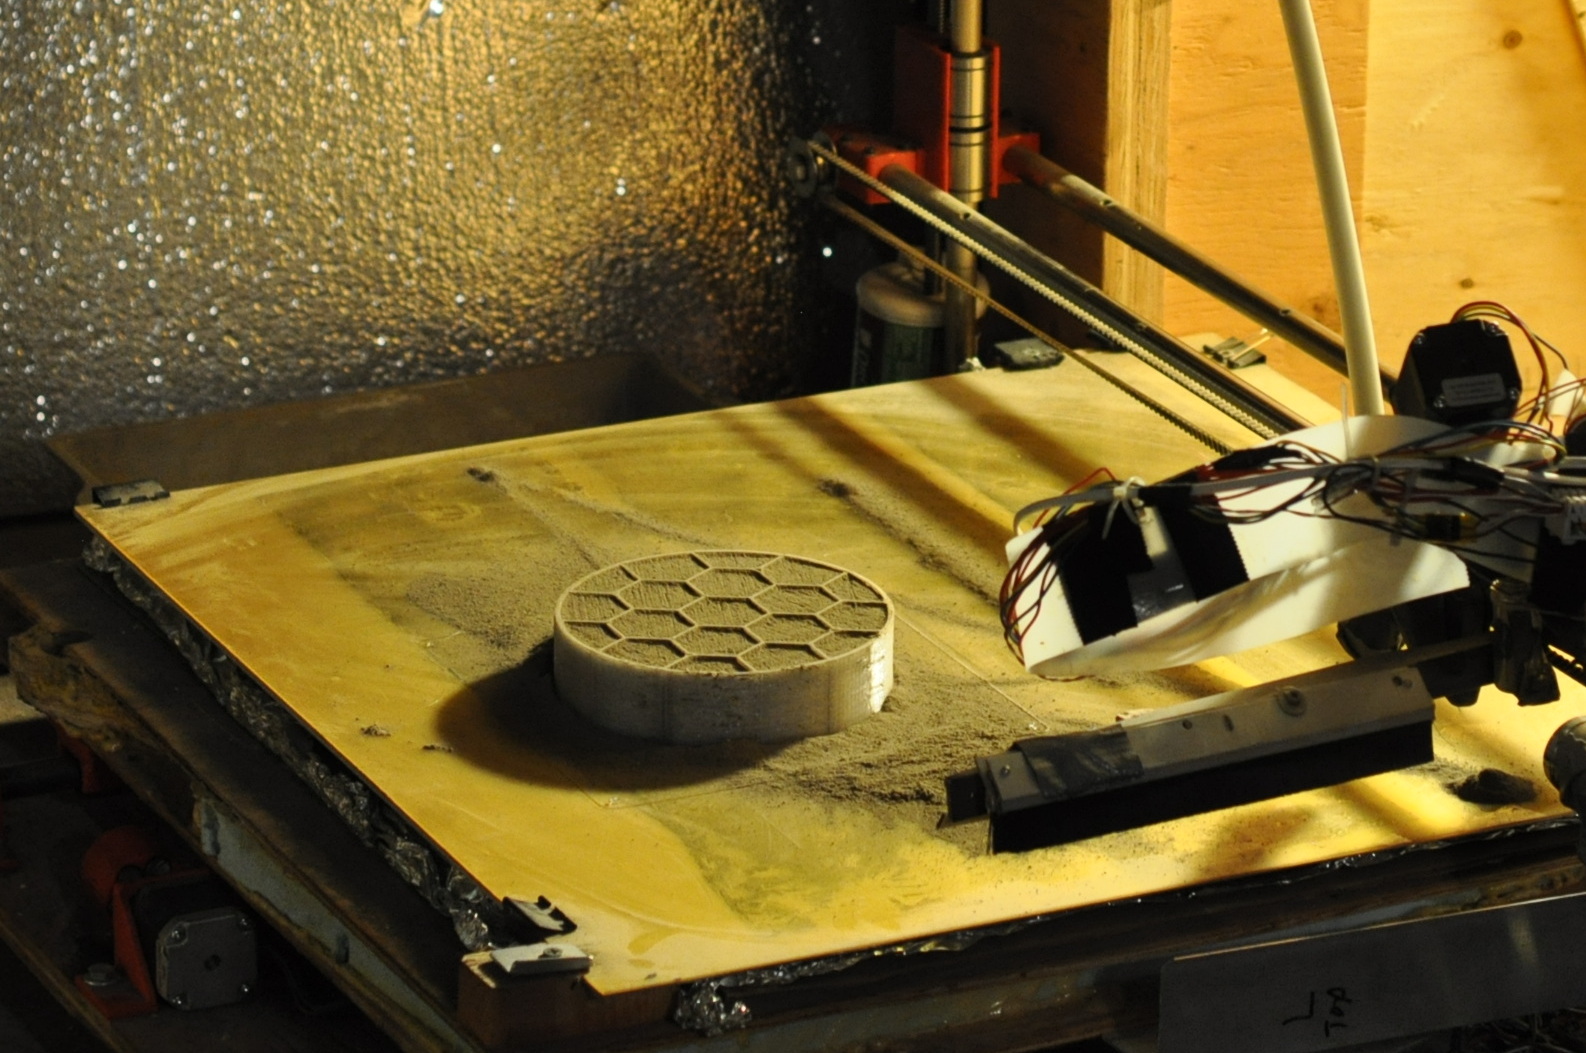 3D printer created by the University of Alaska